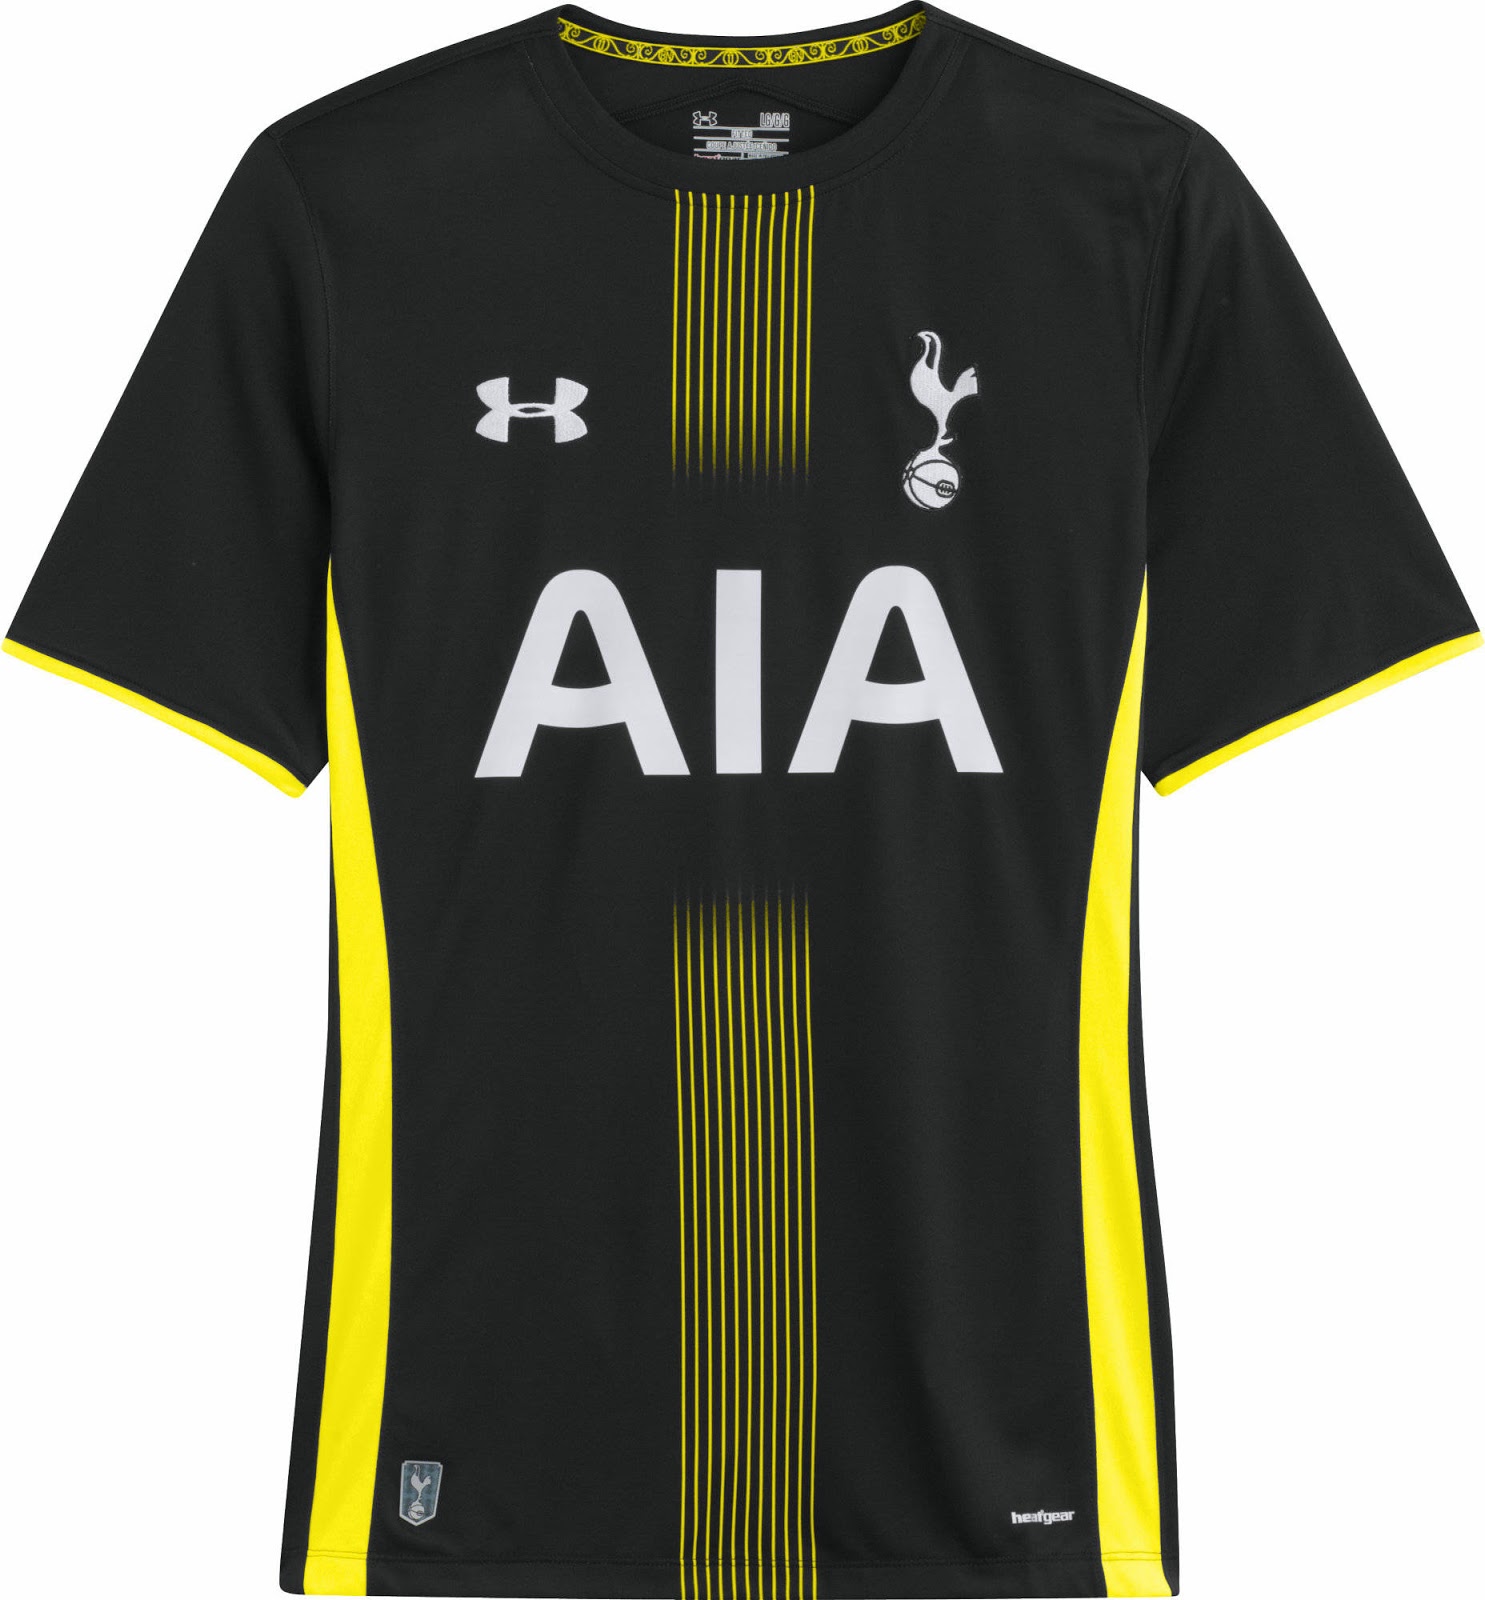 Tottenham Hotspur Away Shirt For 2014/15 Season: Leaked [PHOTO